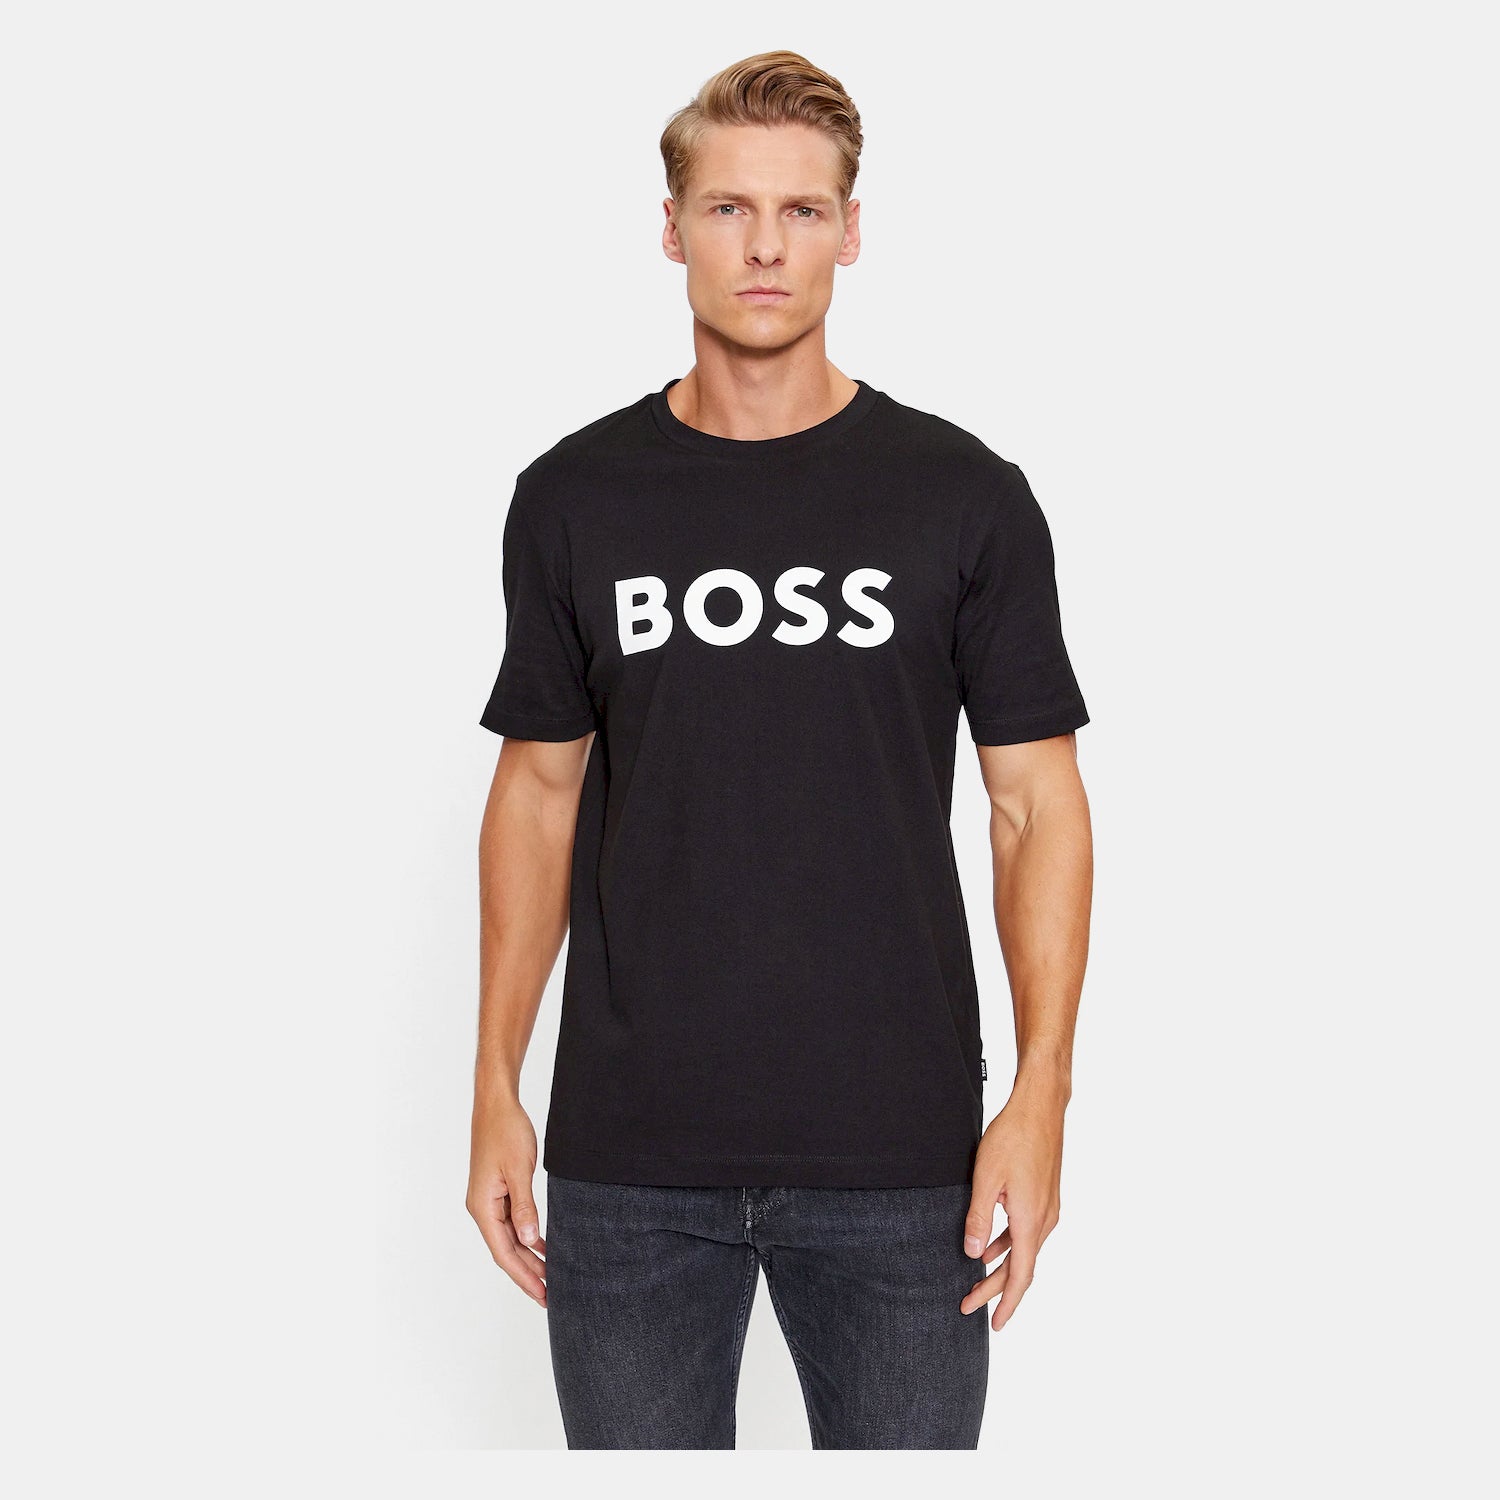 Boss T Shirt Tiburt354 Black Preto_shot4